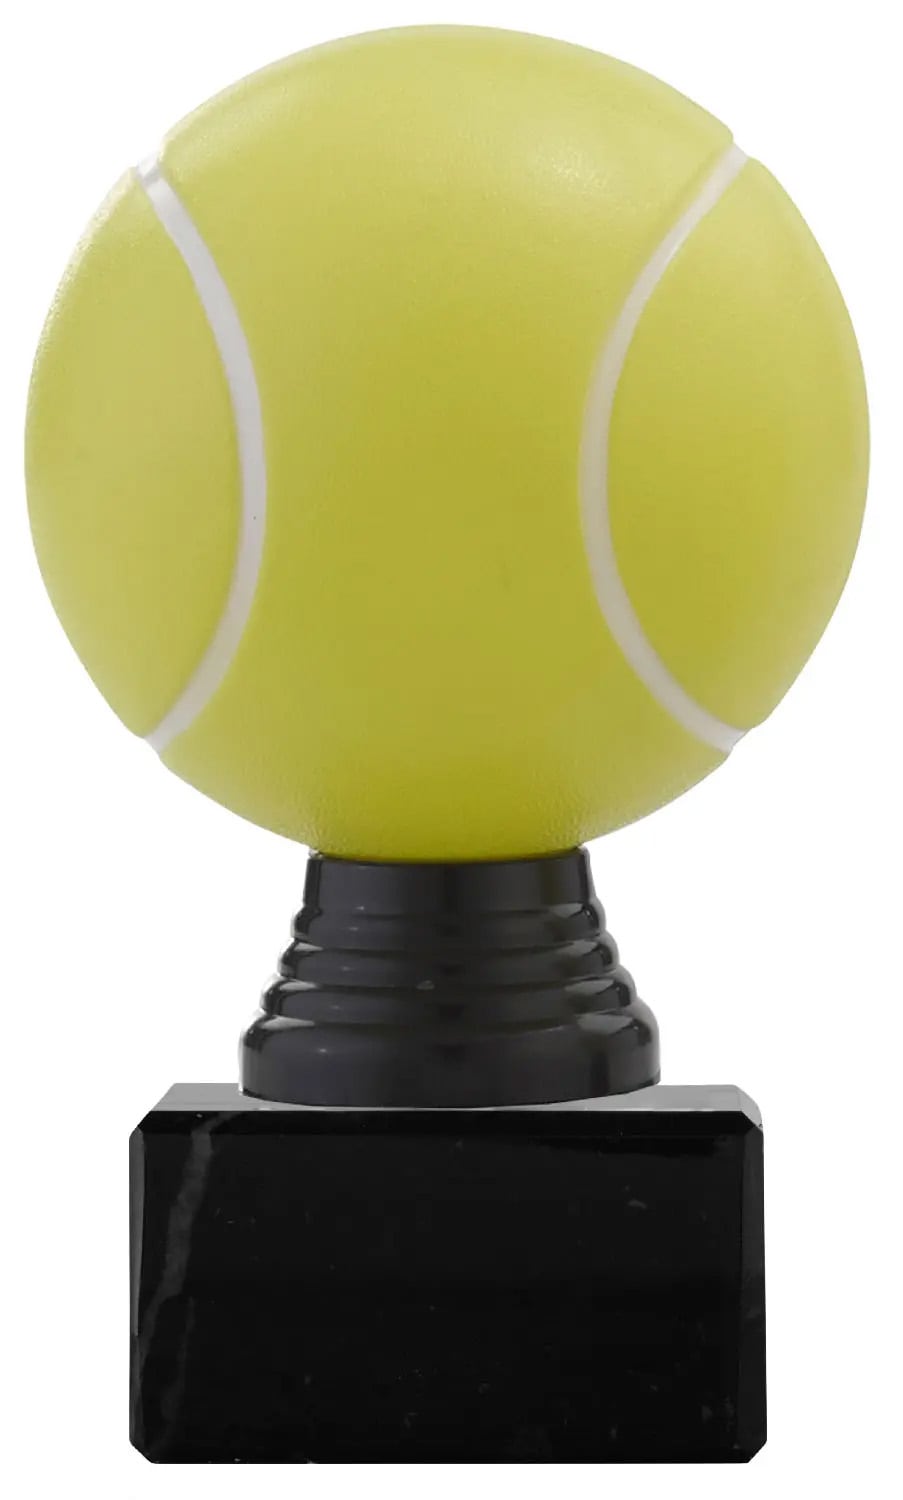 Ballpokal "Tennis" PF305.2 bunt